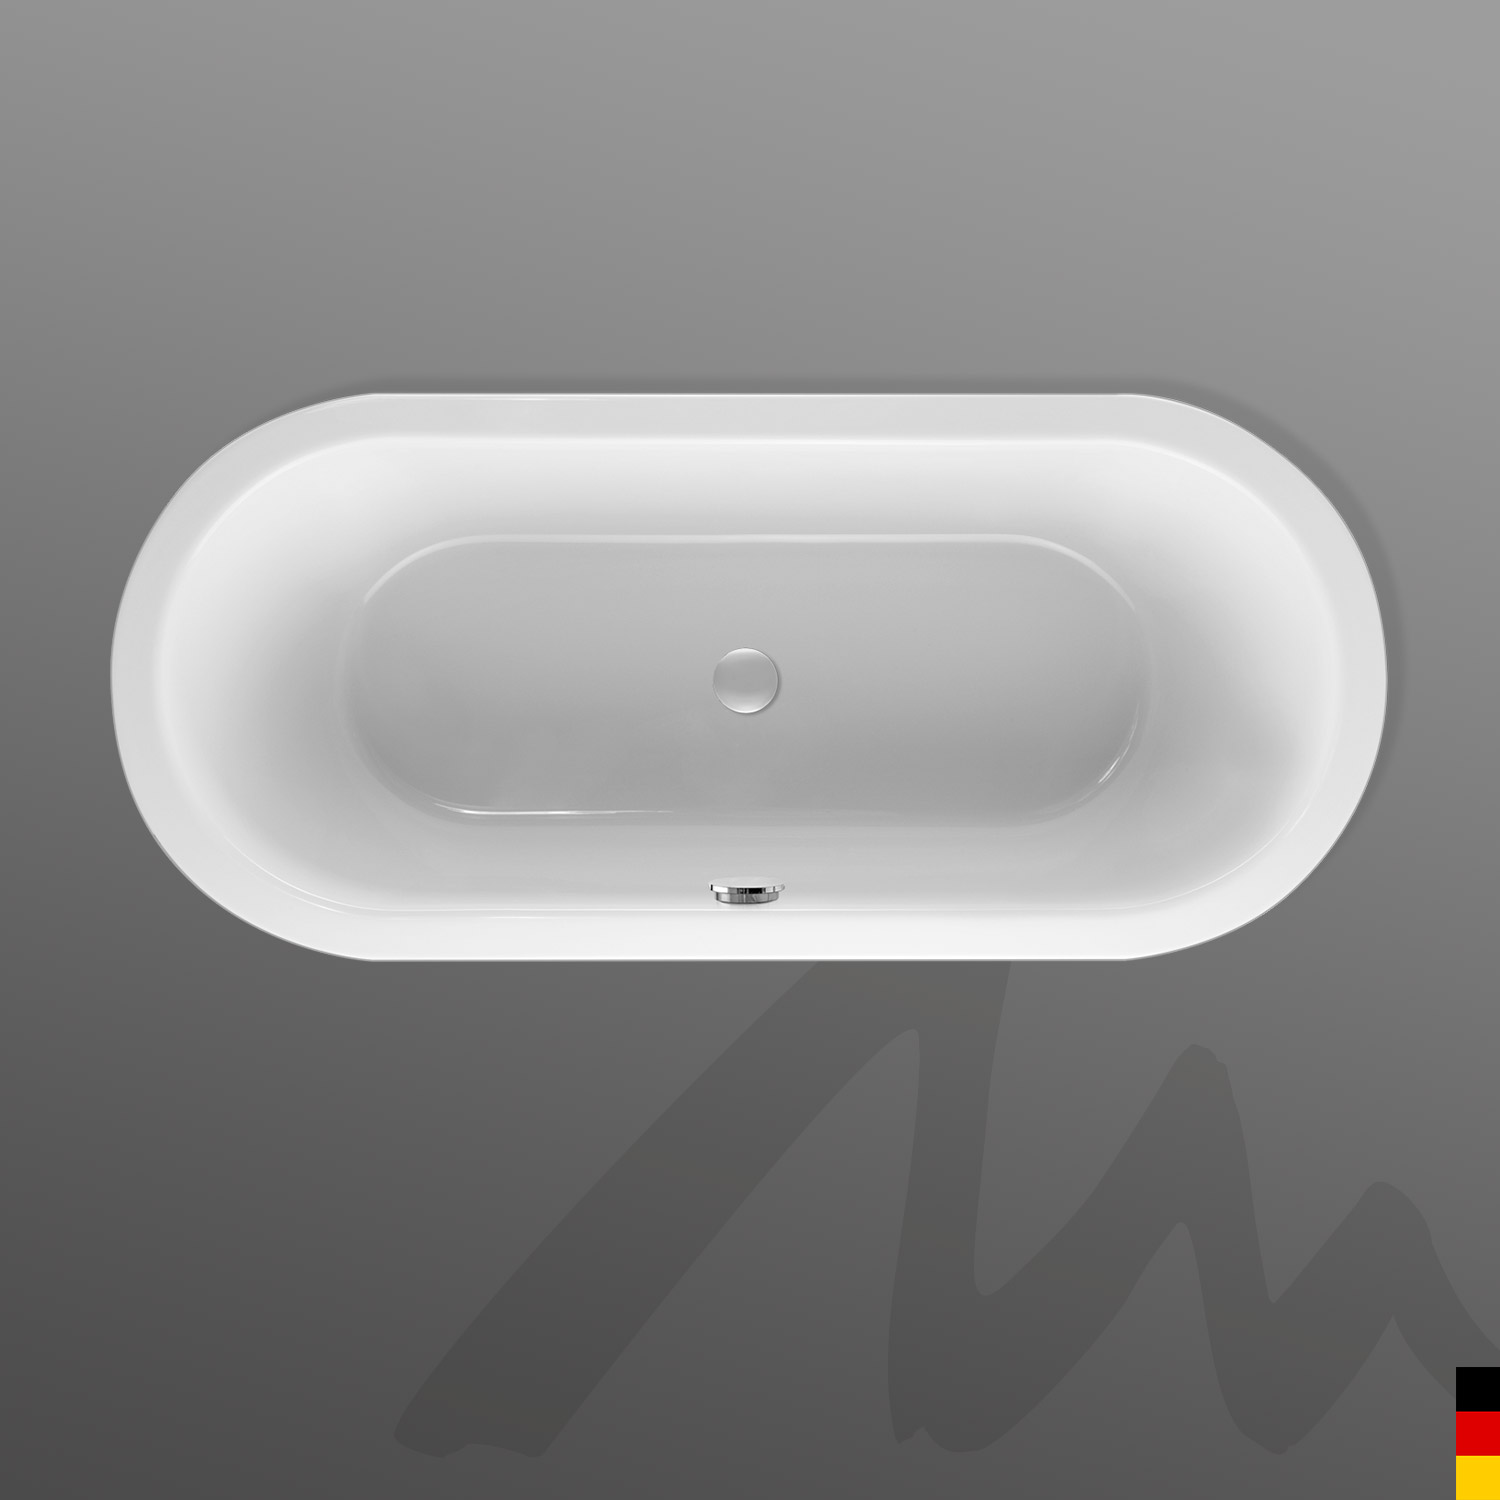 Mauersberger Badewanne Oval Crispa 170/75 duo  170x75x44cm  Farbe:rein-weiß